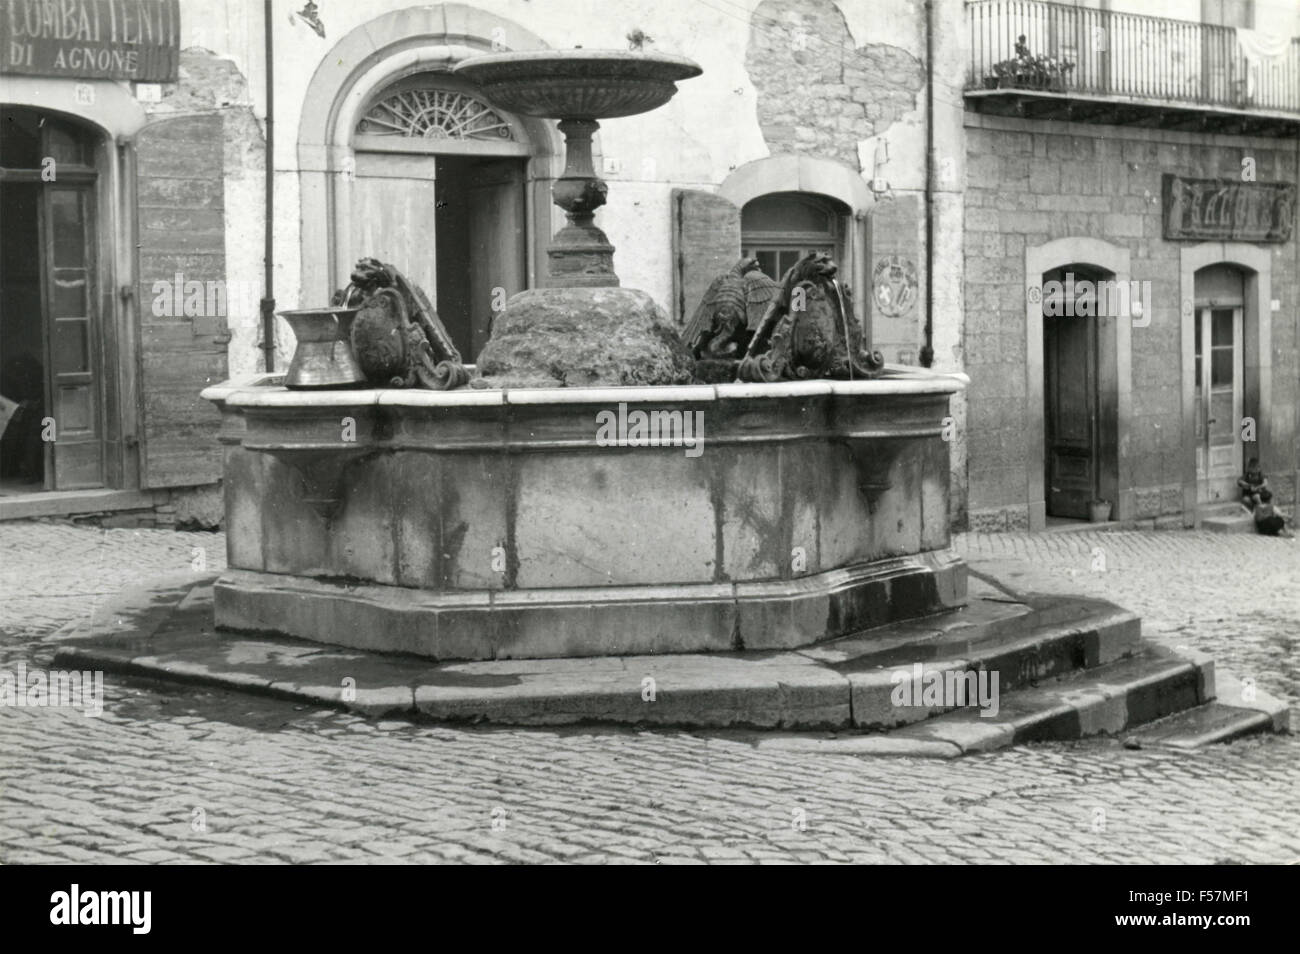 The fountain, Agnone, Italy Stock Photo - Alamy